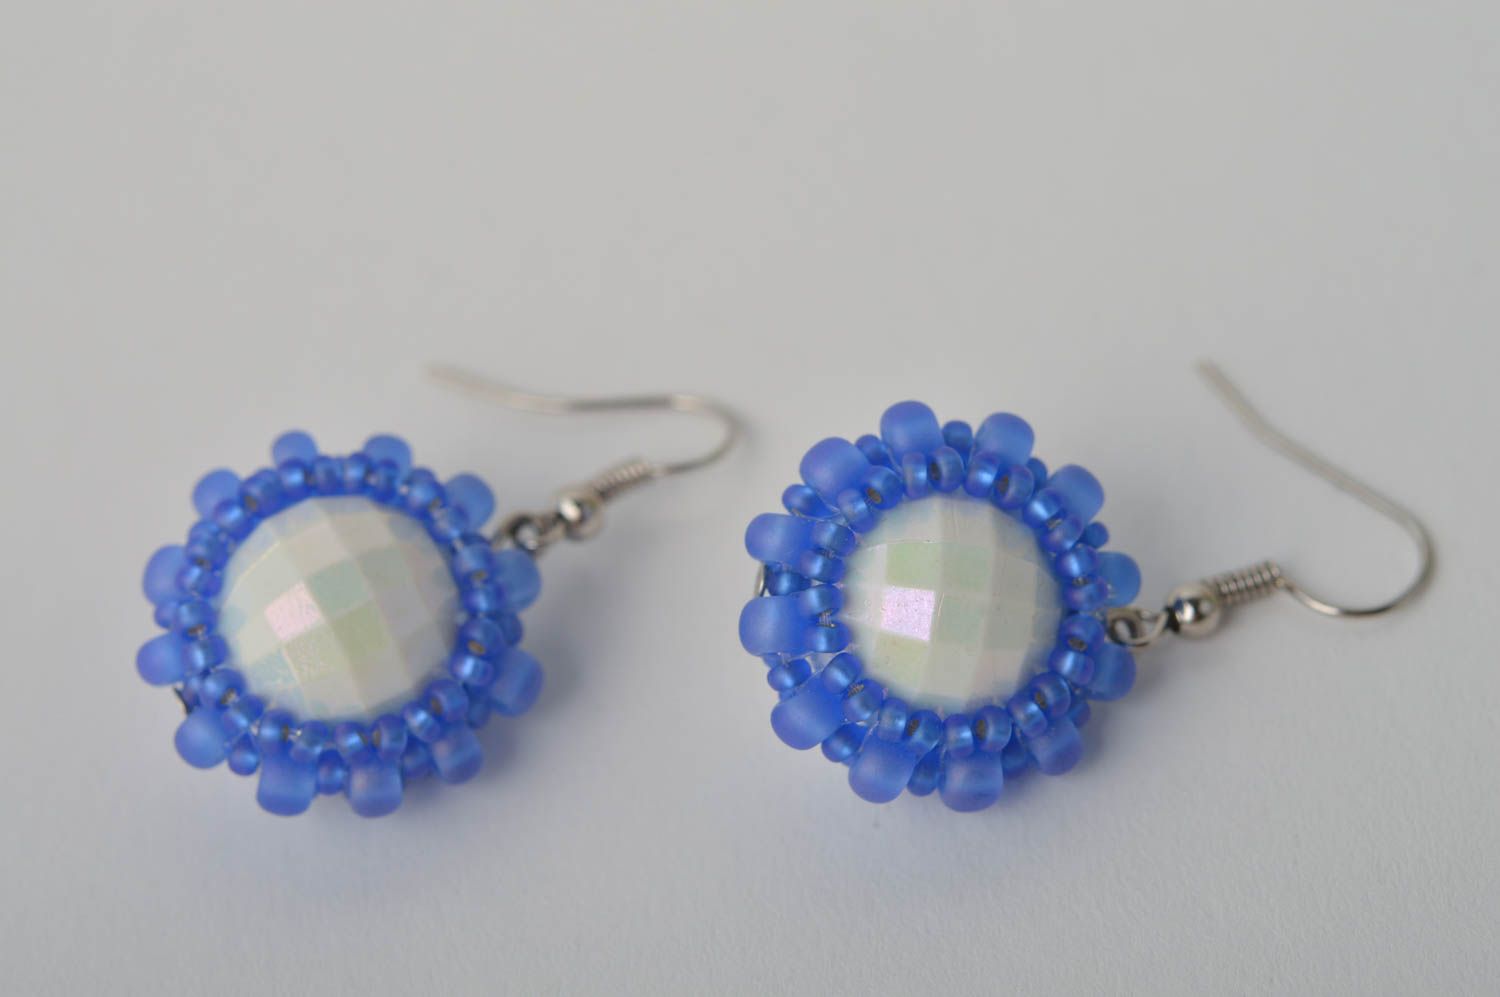 Unusual handmade beaded earrings fashion trends beautiful jewellery gift ideas photo 2